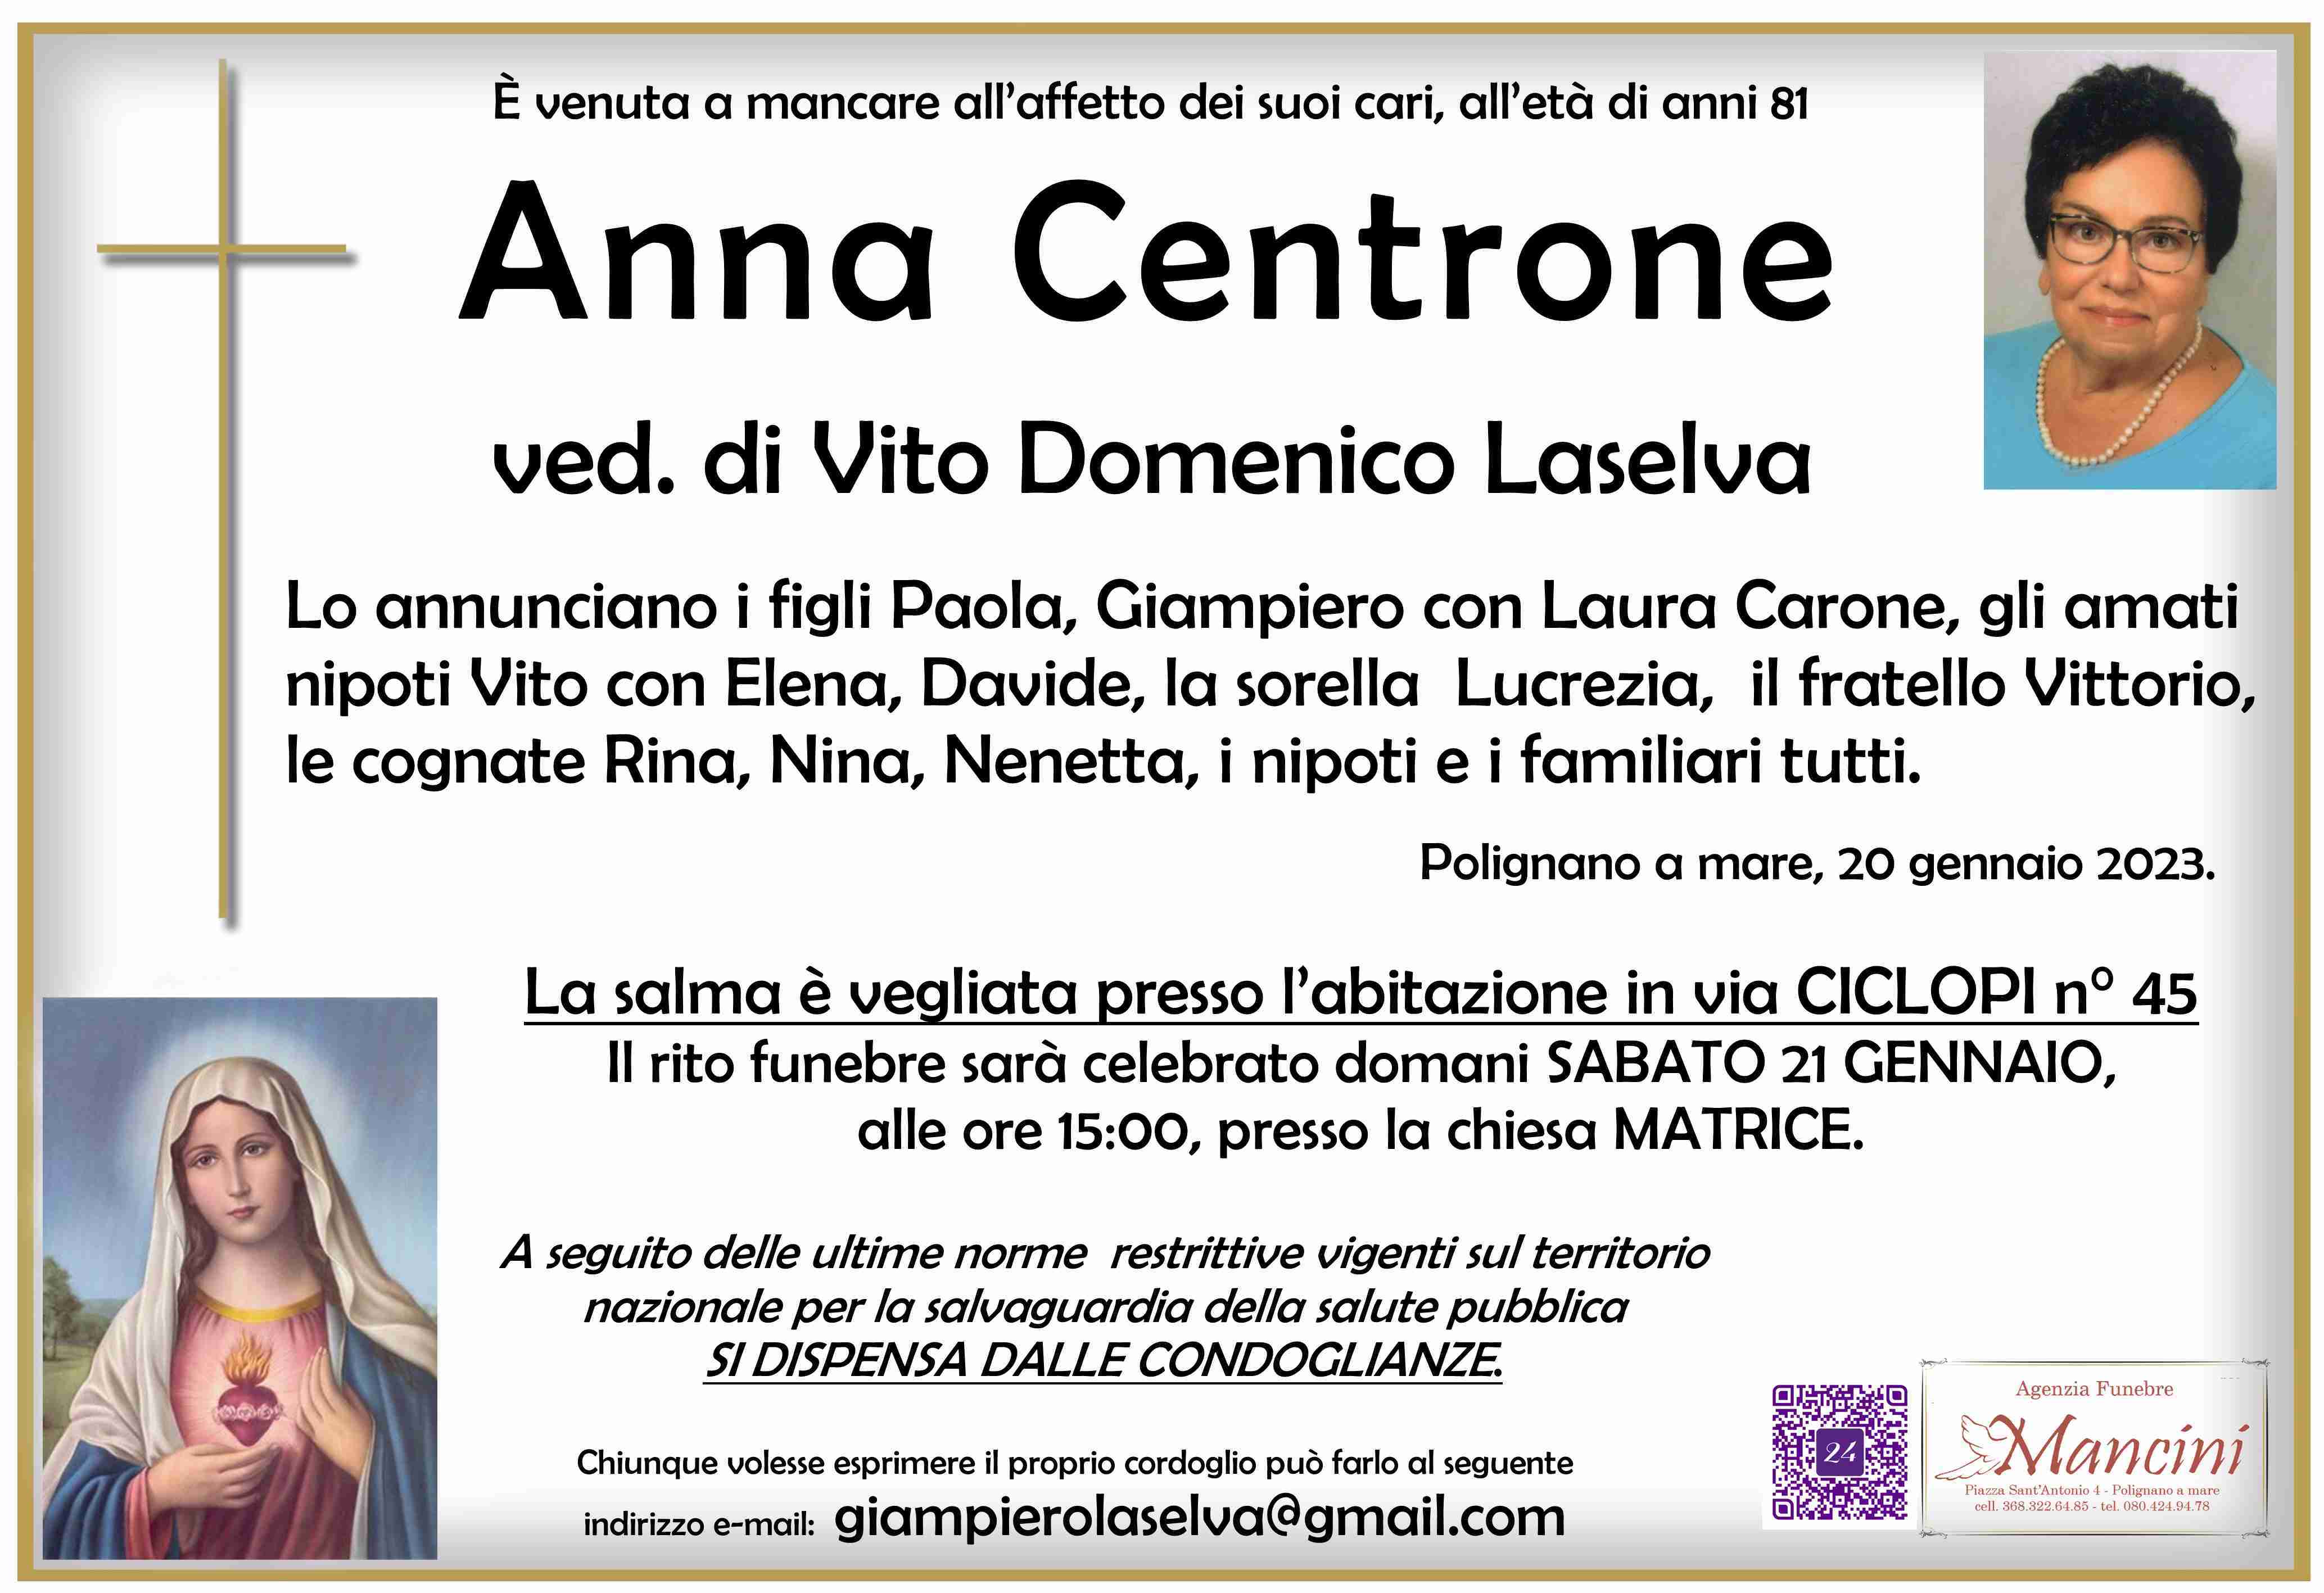 Anna Centrone